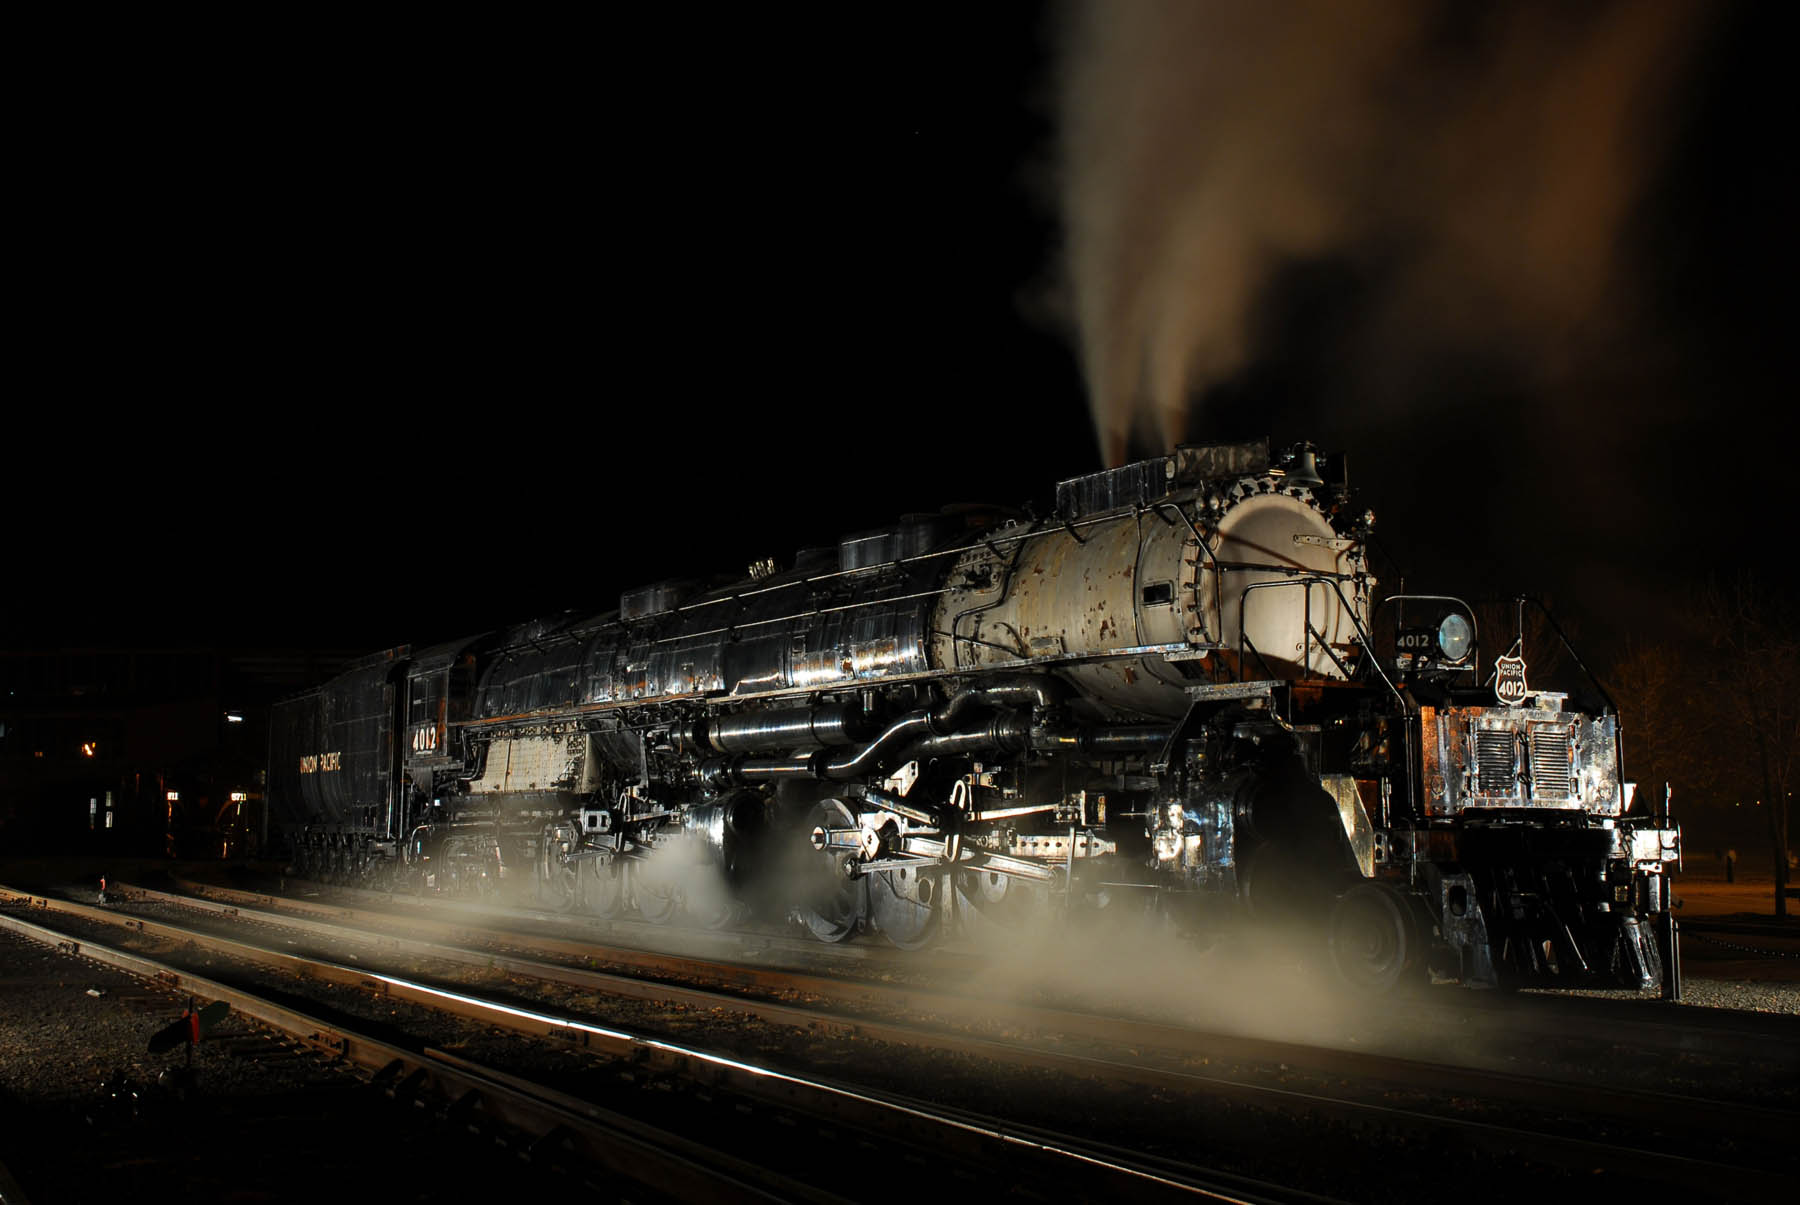 Big Boy Union Pacific Railroad number 4012